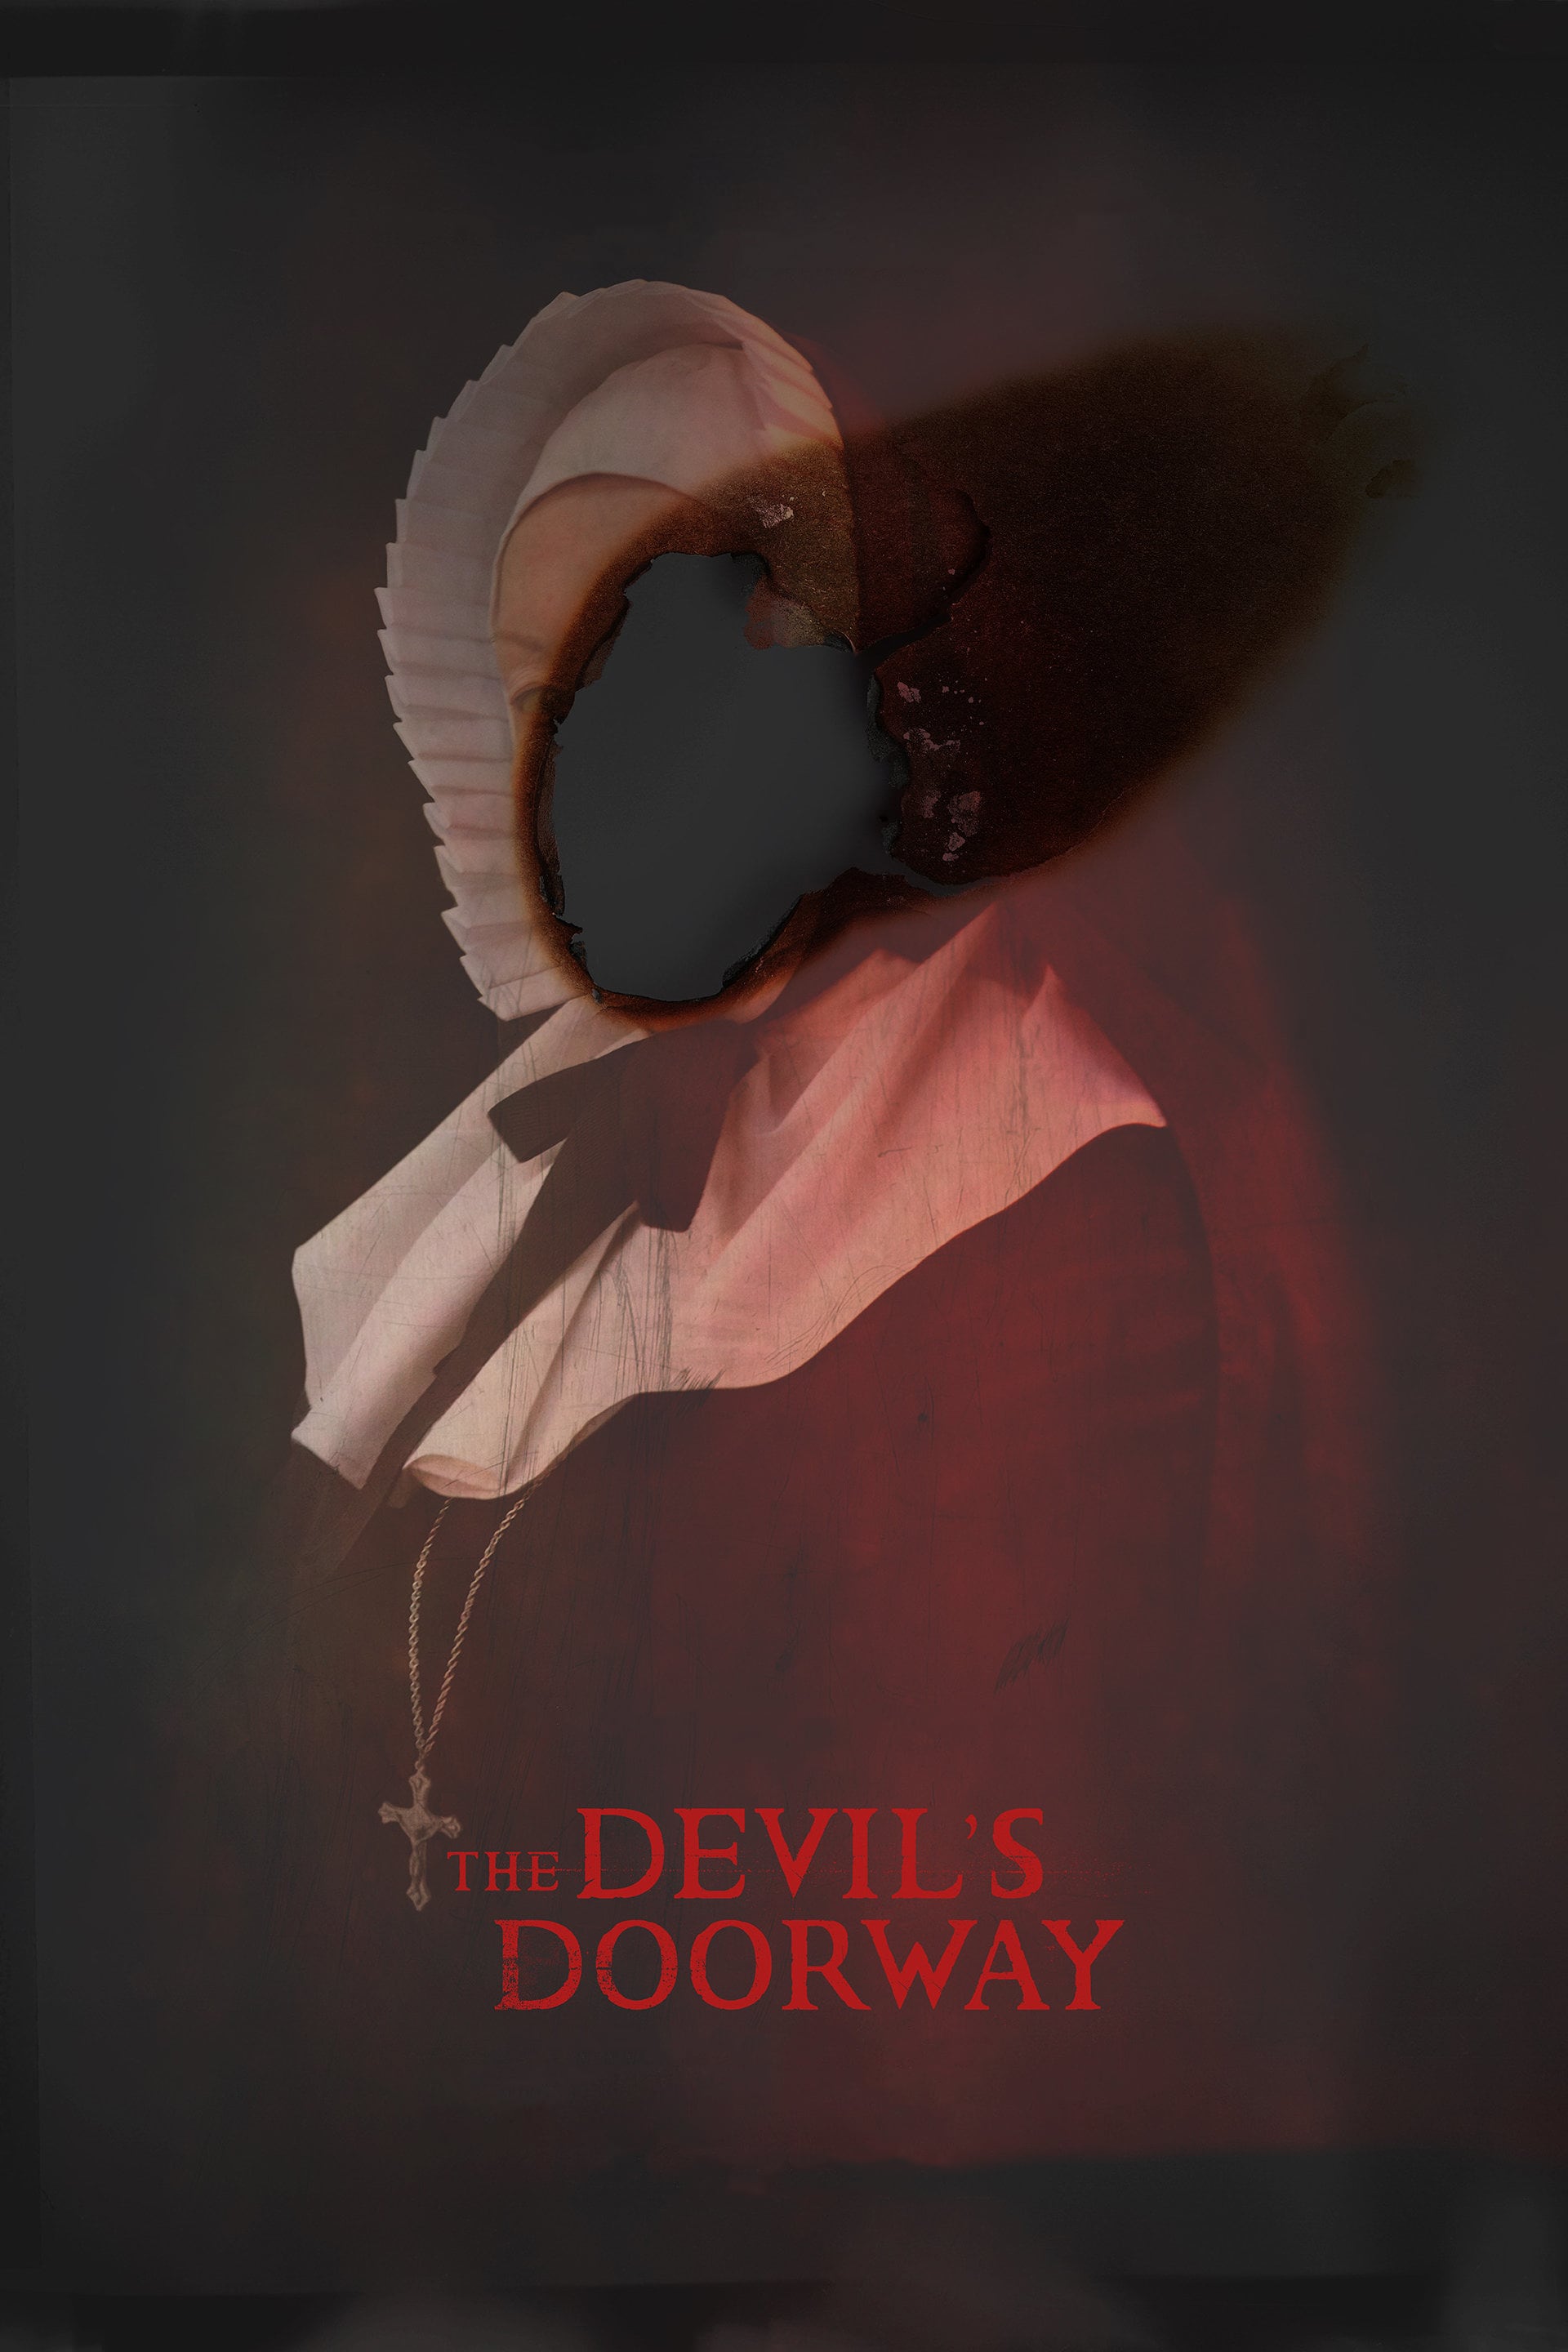 Poster de la película "The Devil's Doorway"